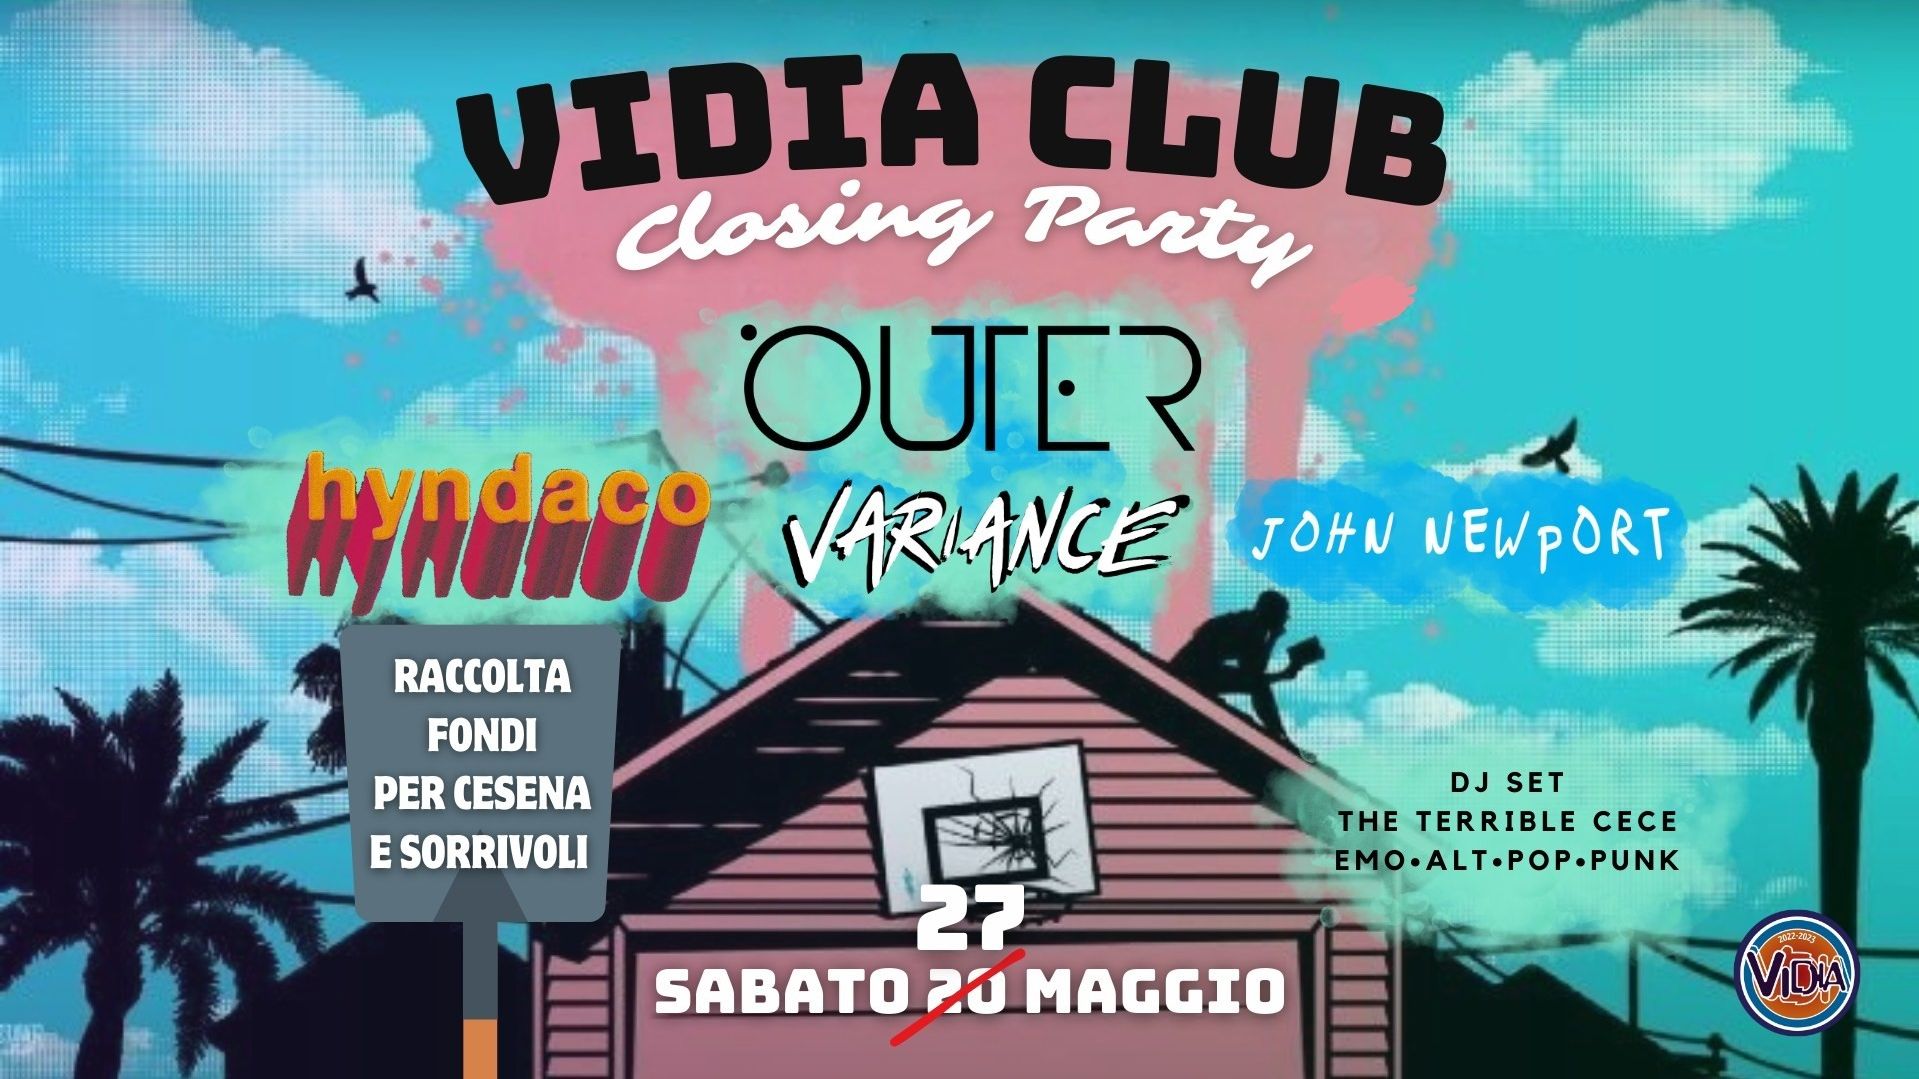 Vidia Closing Party & raccolta fondi - Outer + Guests